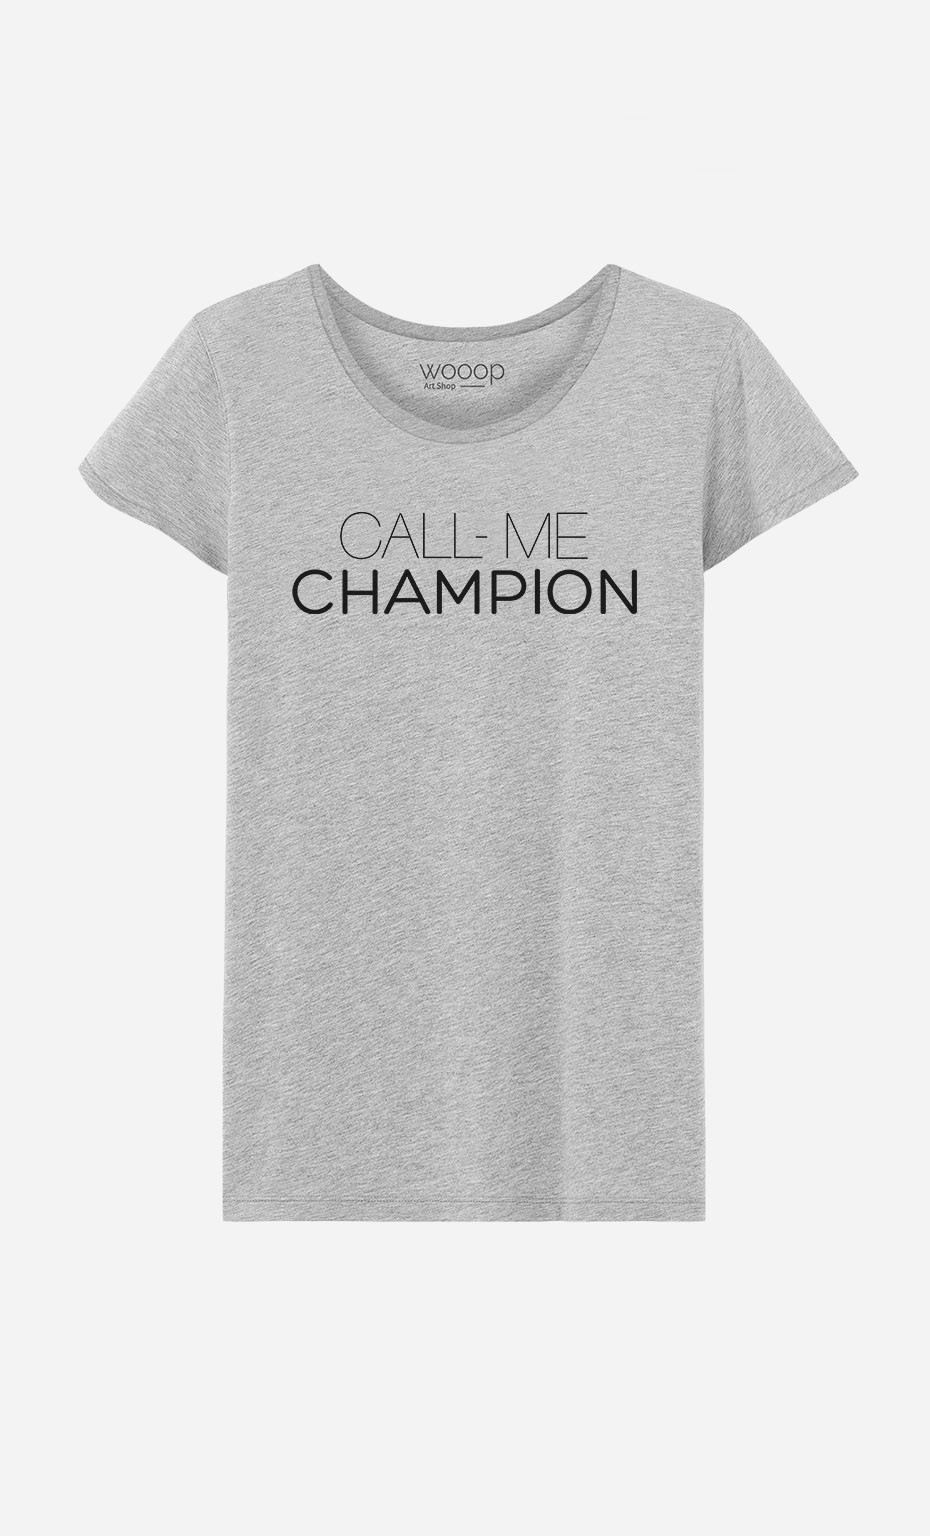 T-Shirt Call Me Champion